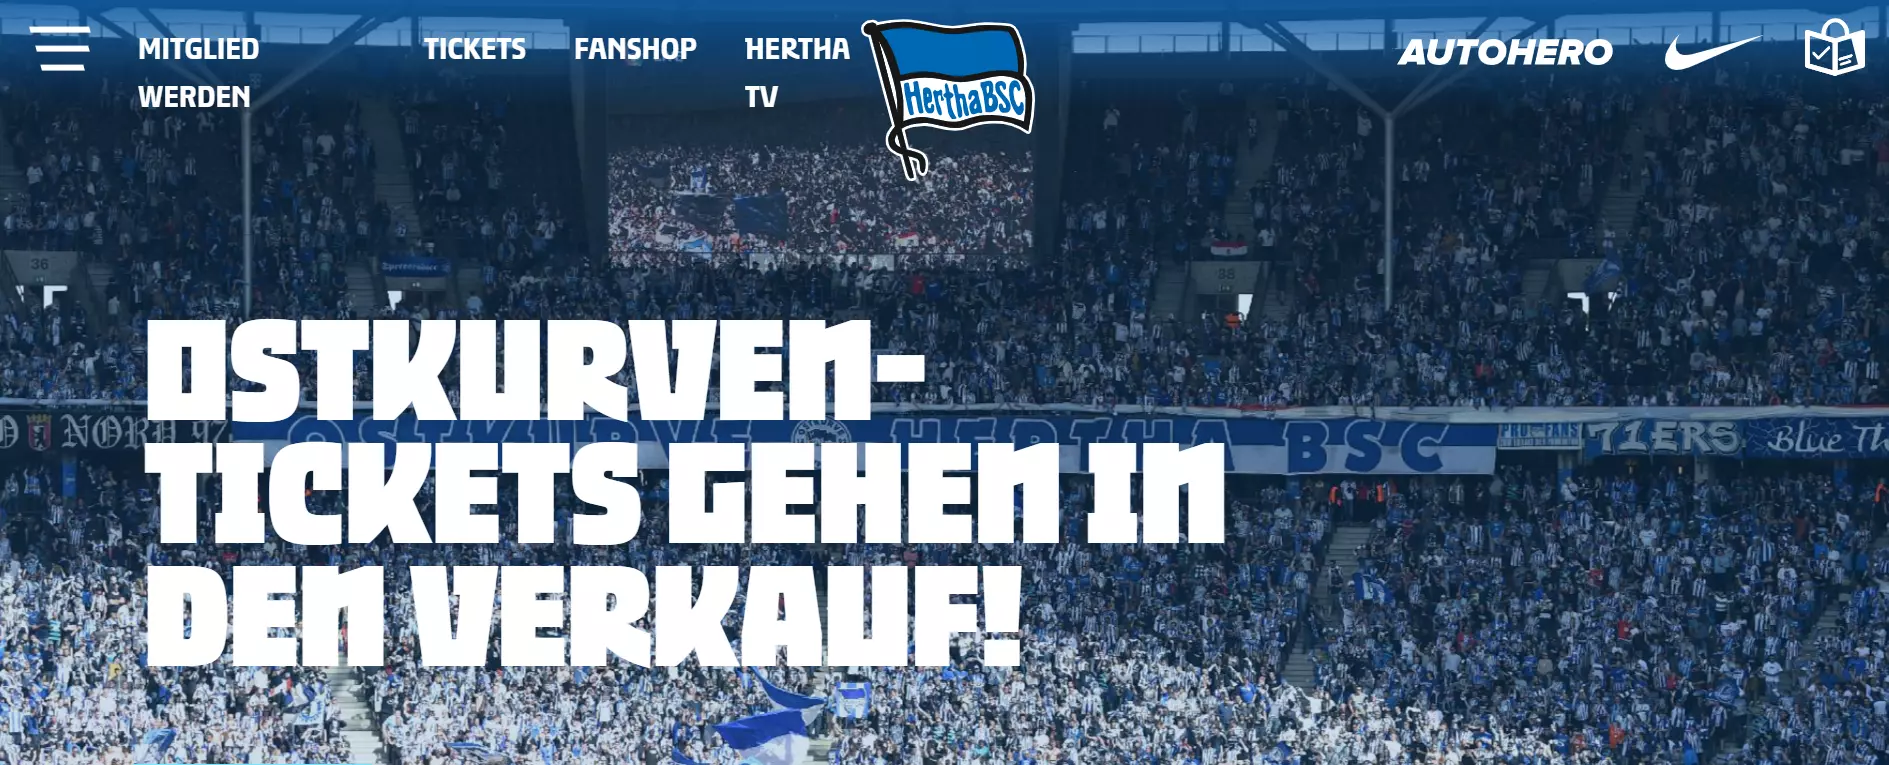 Hertha BSC online